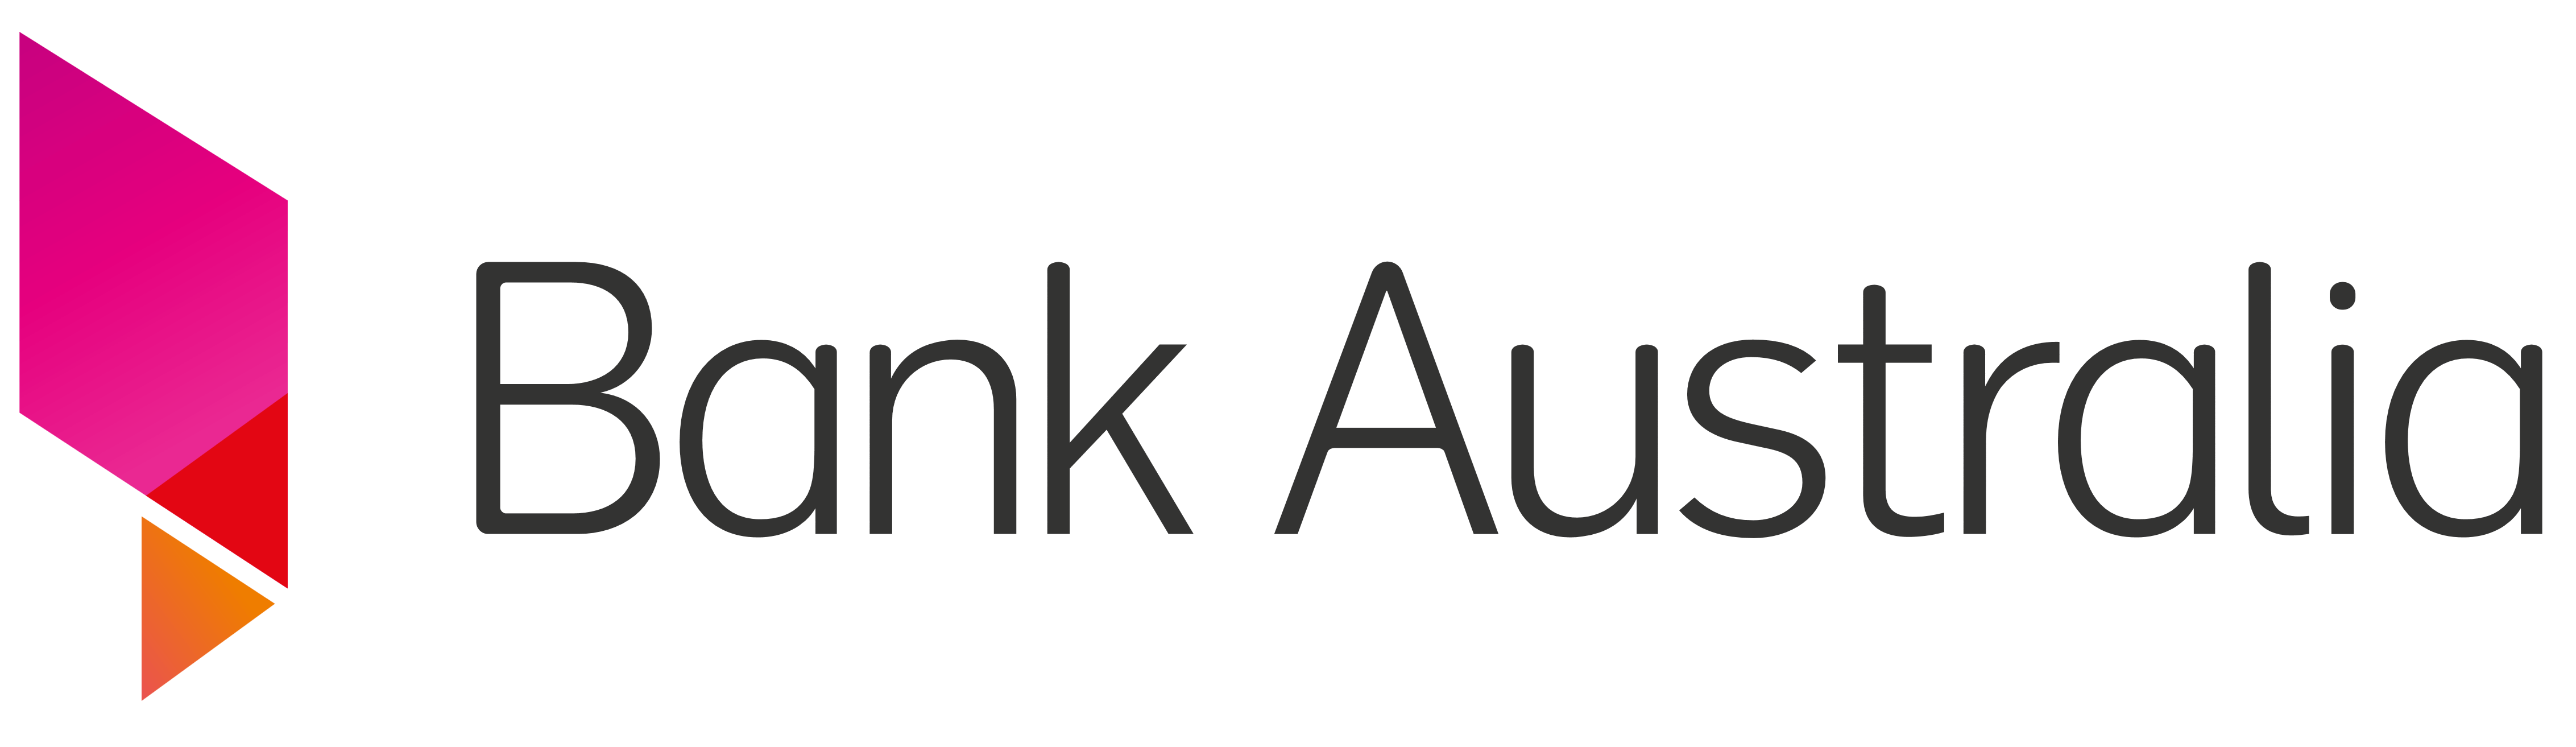 Bank Australia logo, logotype